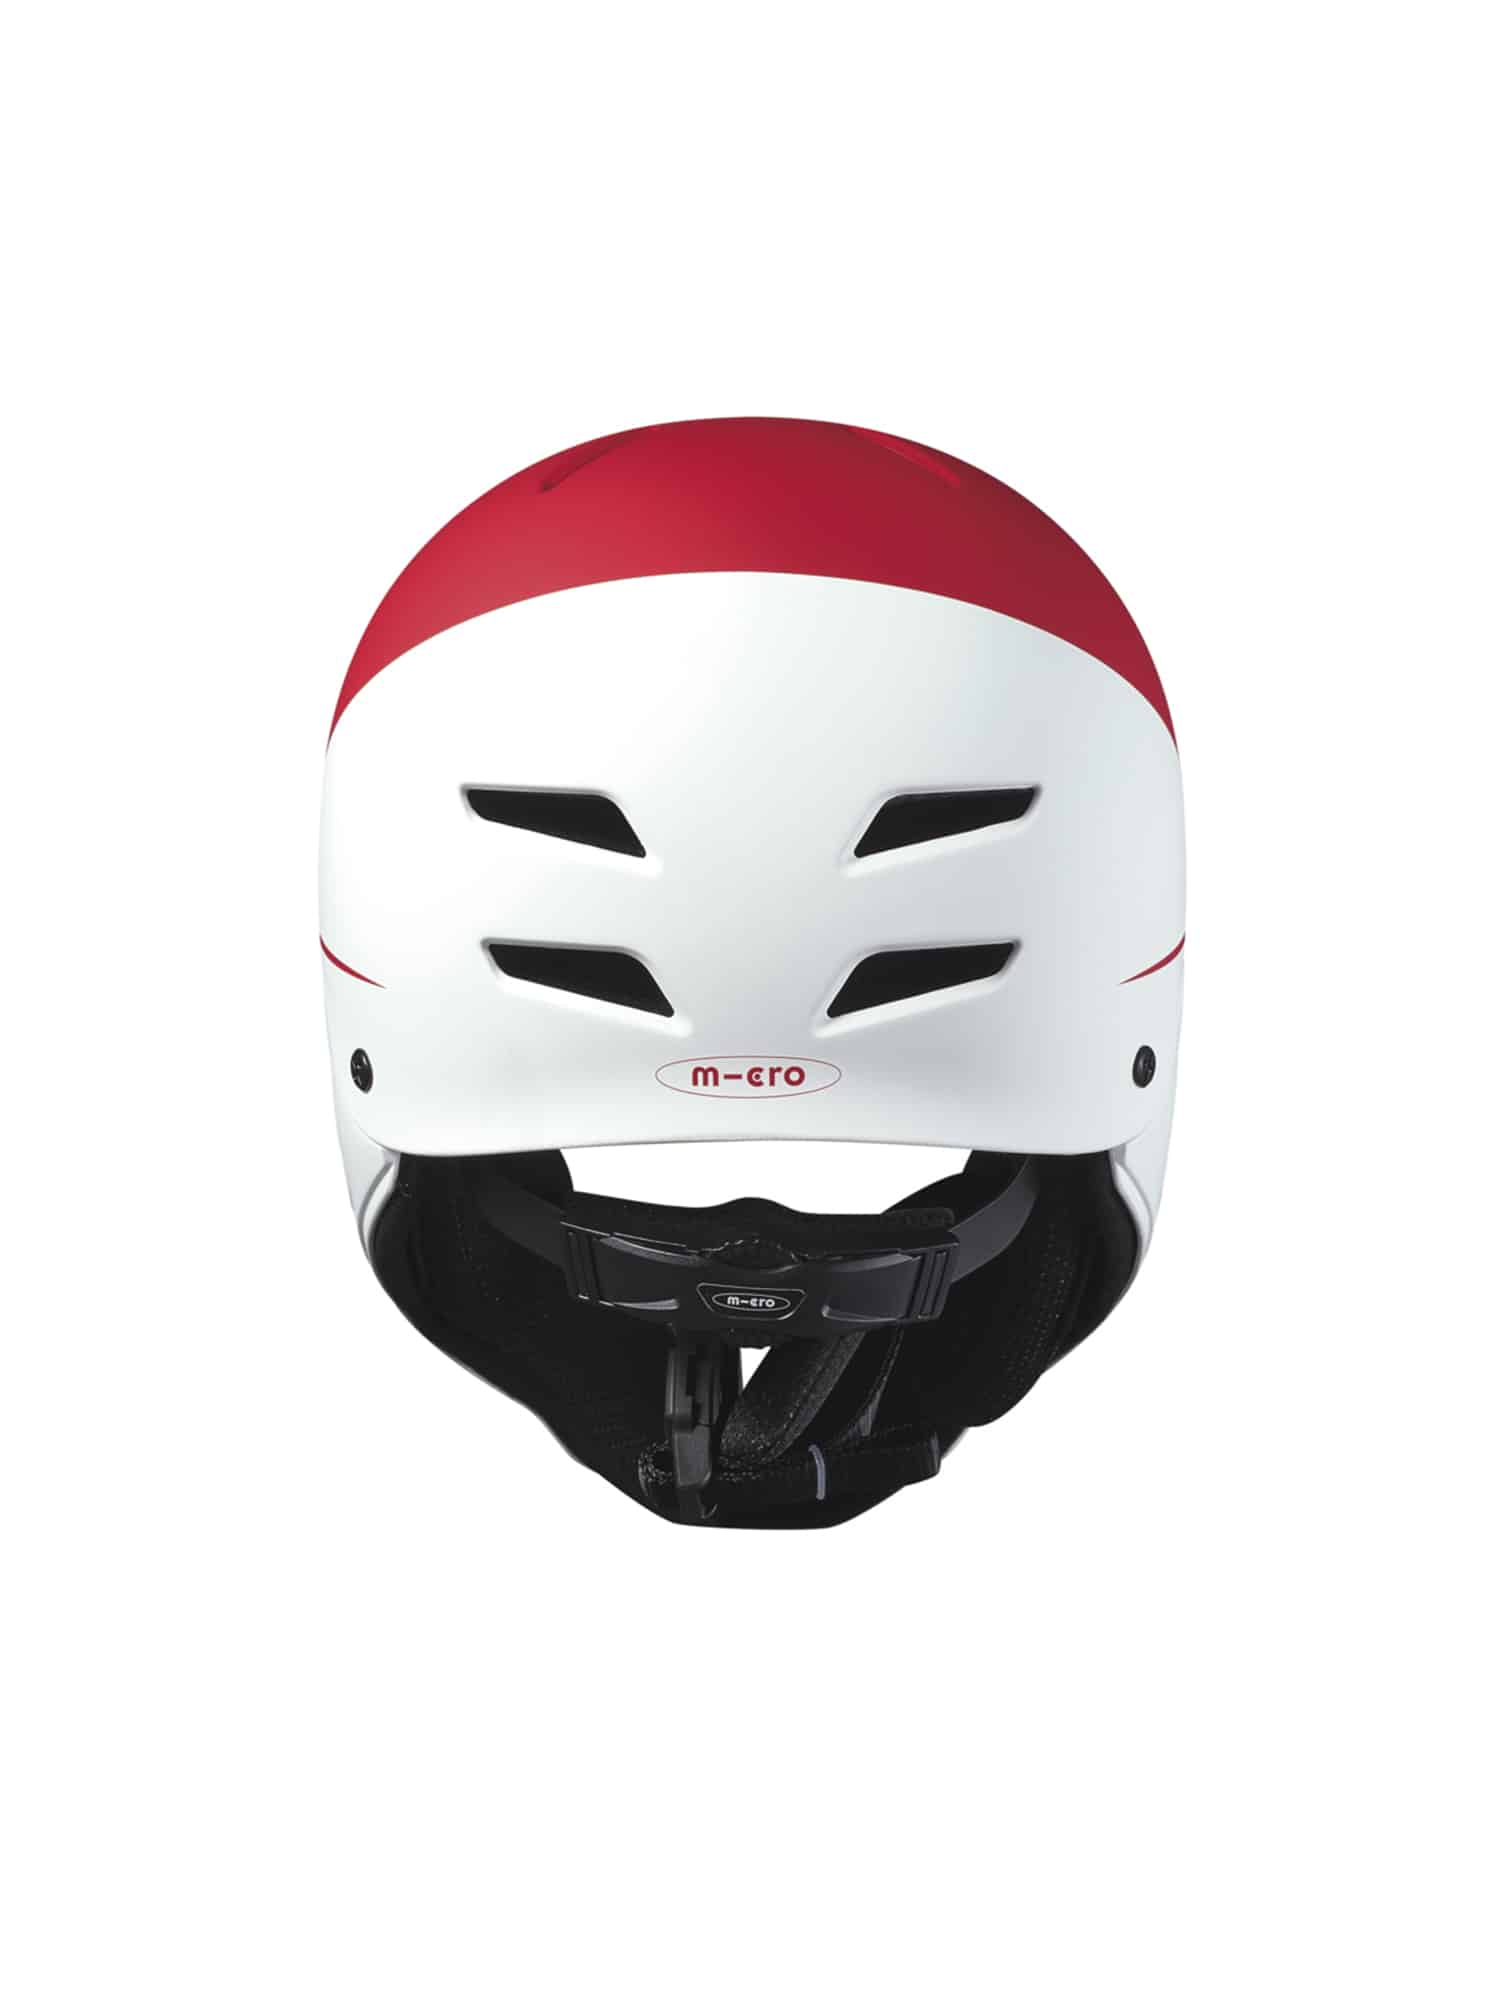 Micro Racing Helmet White/Red, AC2133BX